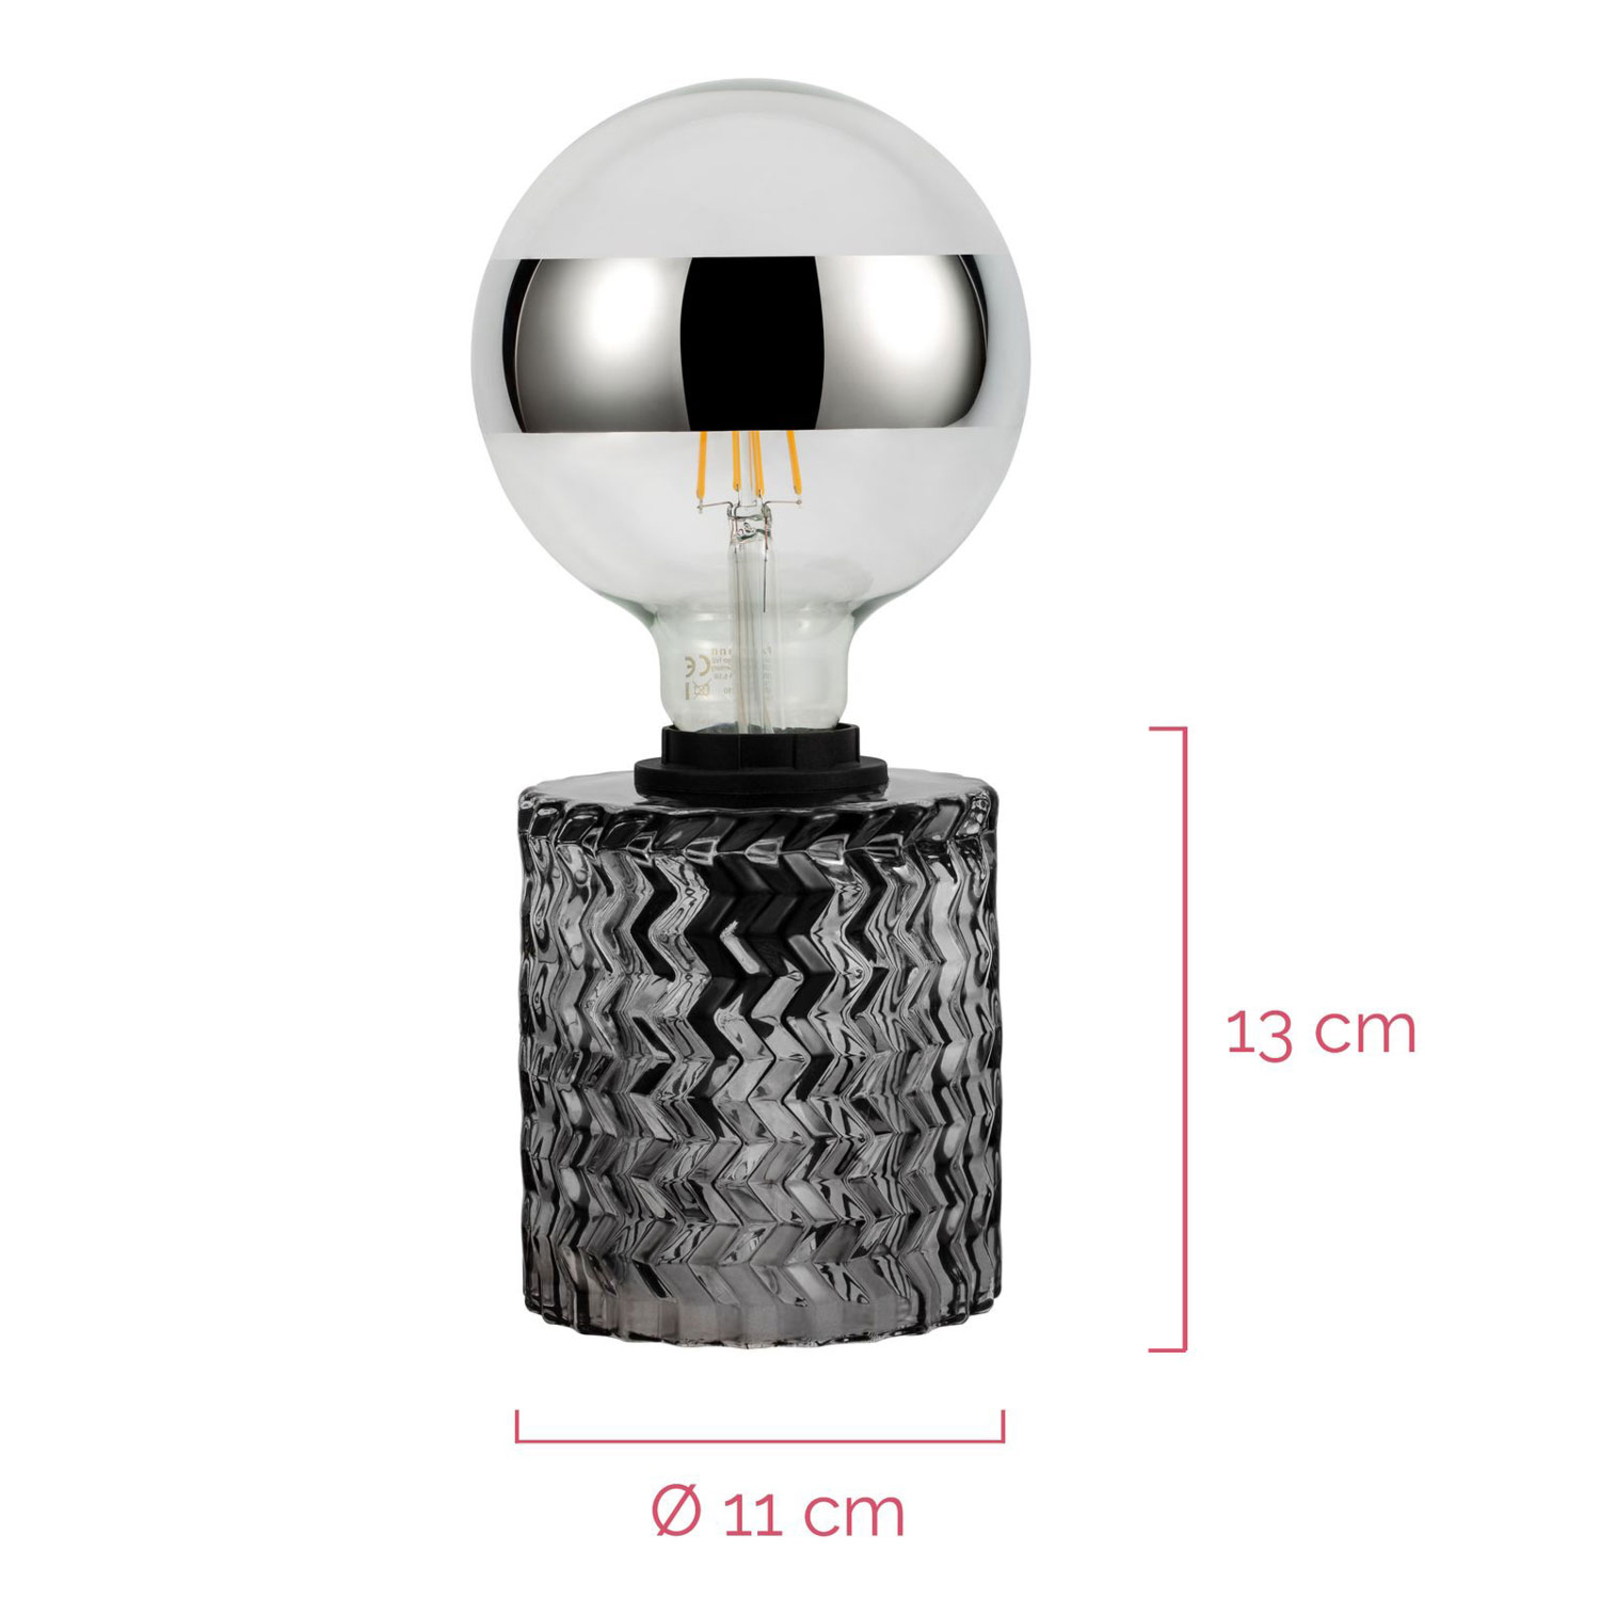 Pauleen Crystal Smoke bordslampa med glassockel